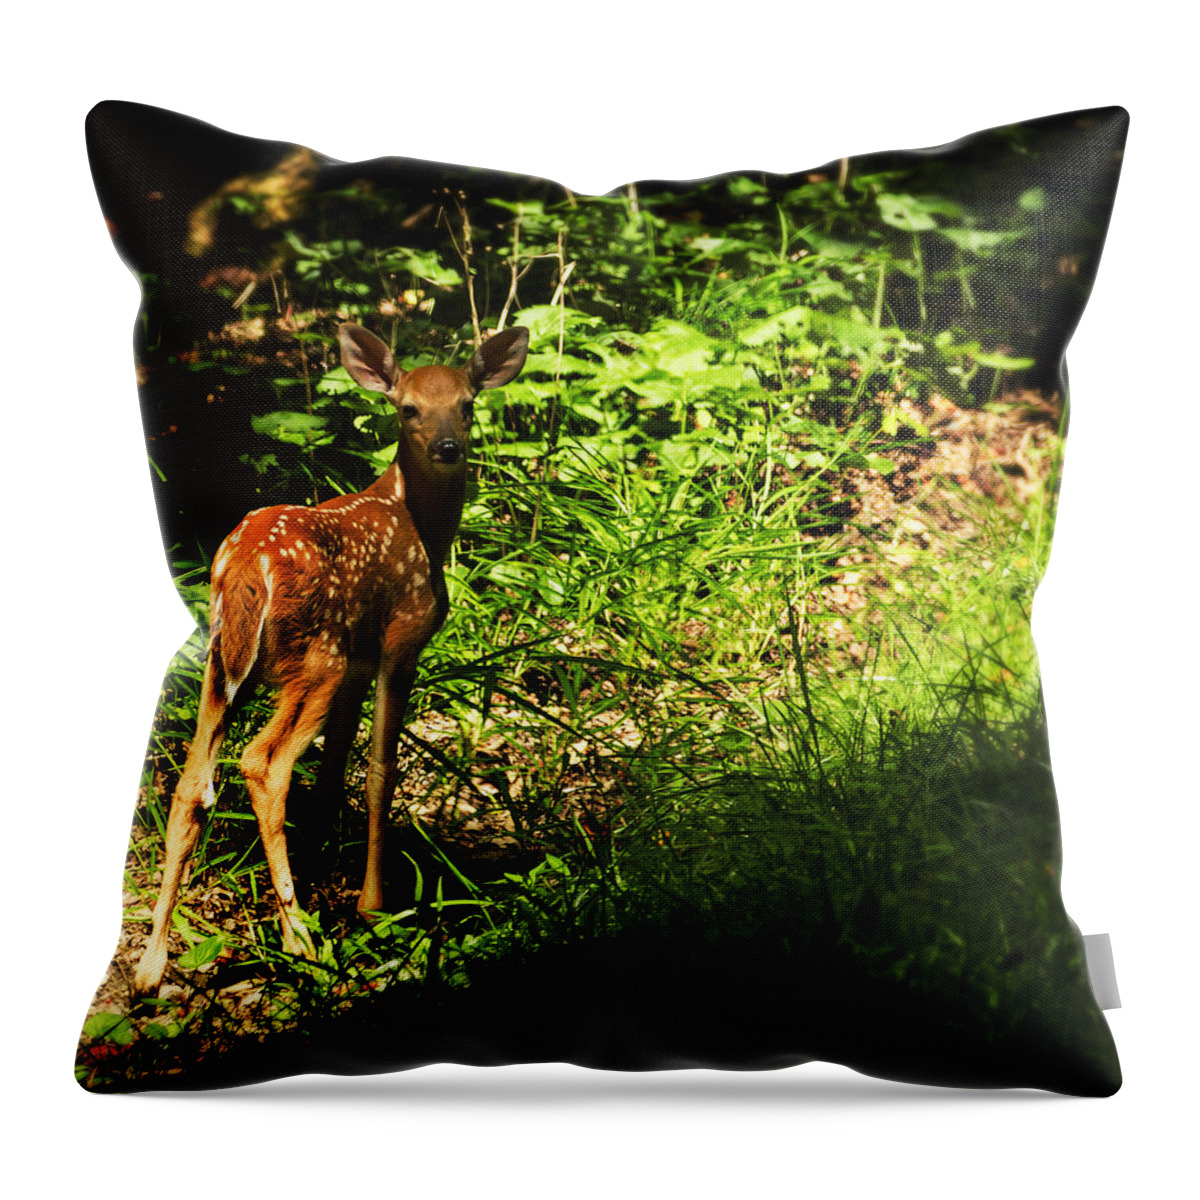 Deer Throw Pillow featuring the photograph Bambi by Melissa Petrey